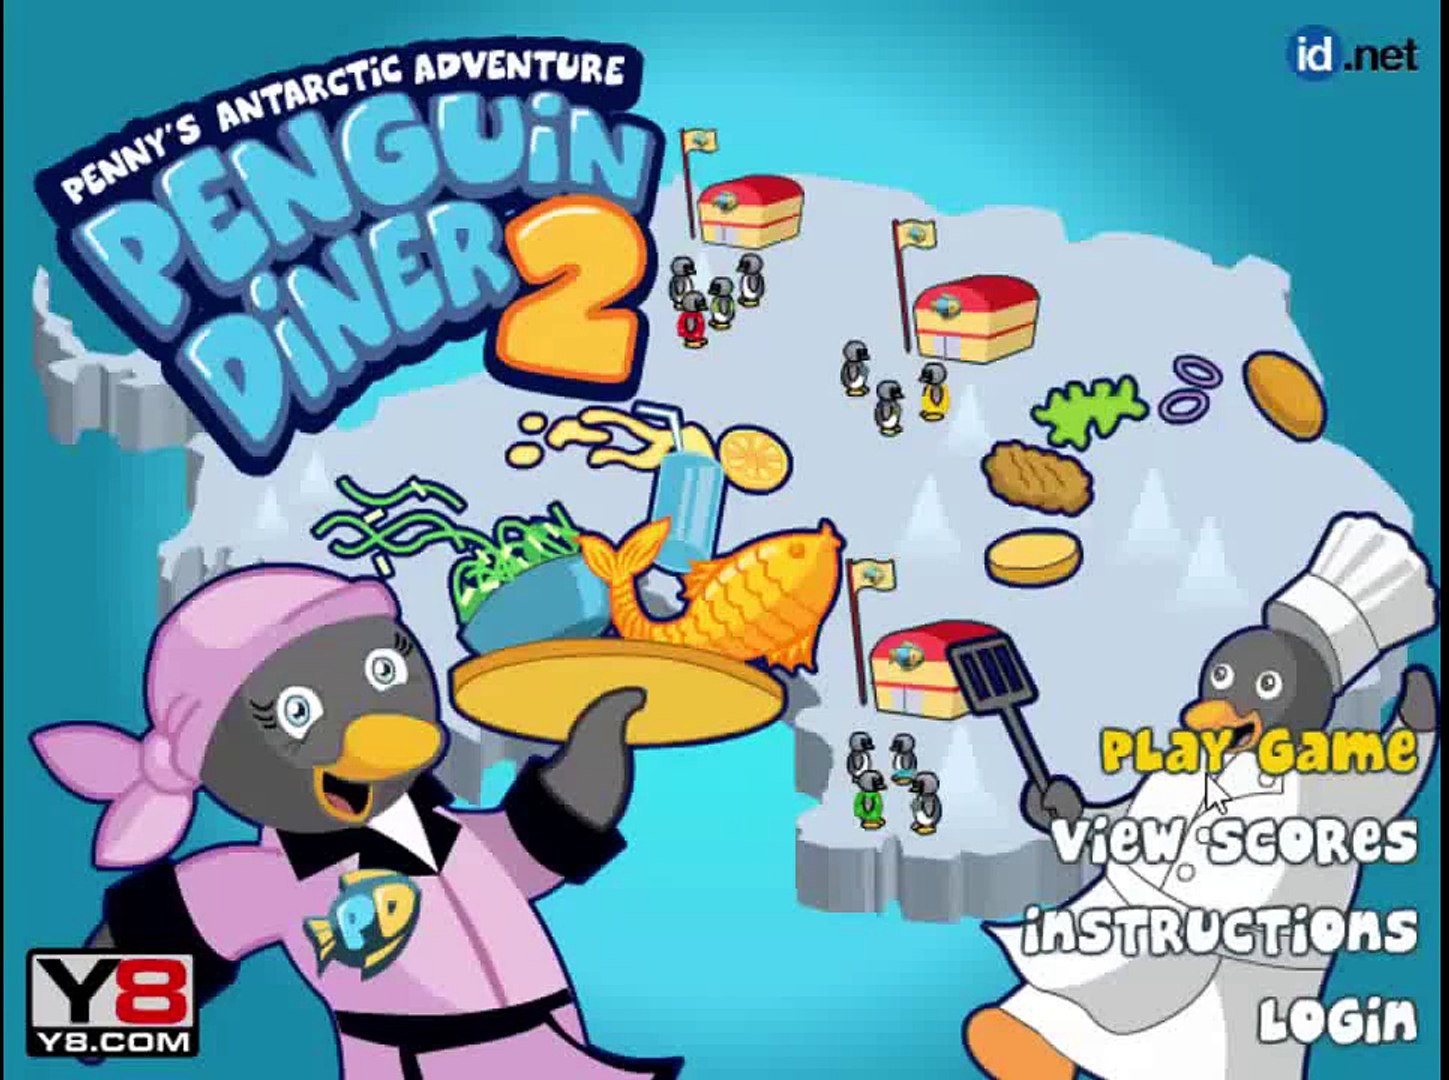 Penguin diner 2 - most popular - online games on y8 - kids games -  Dailymotion Video